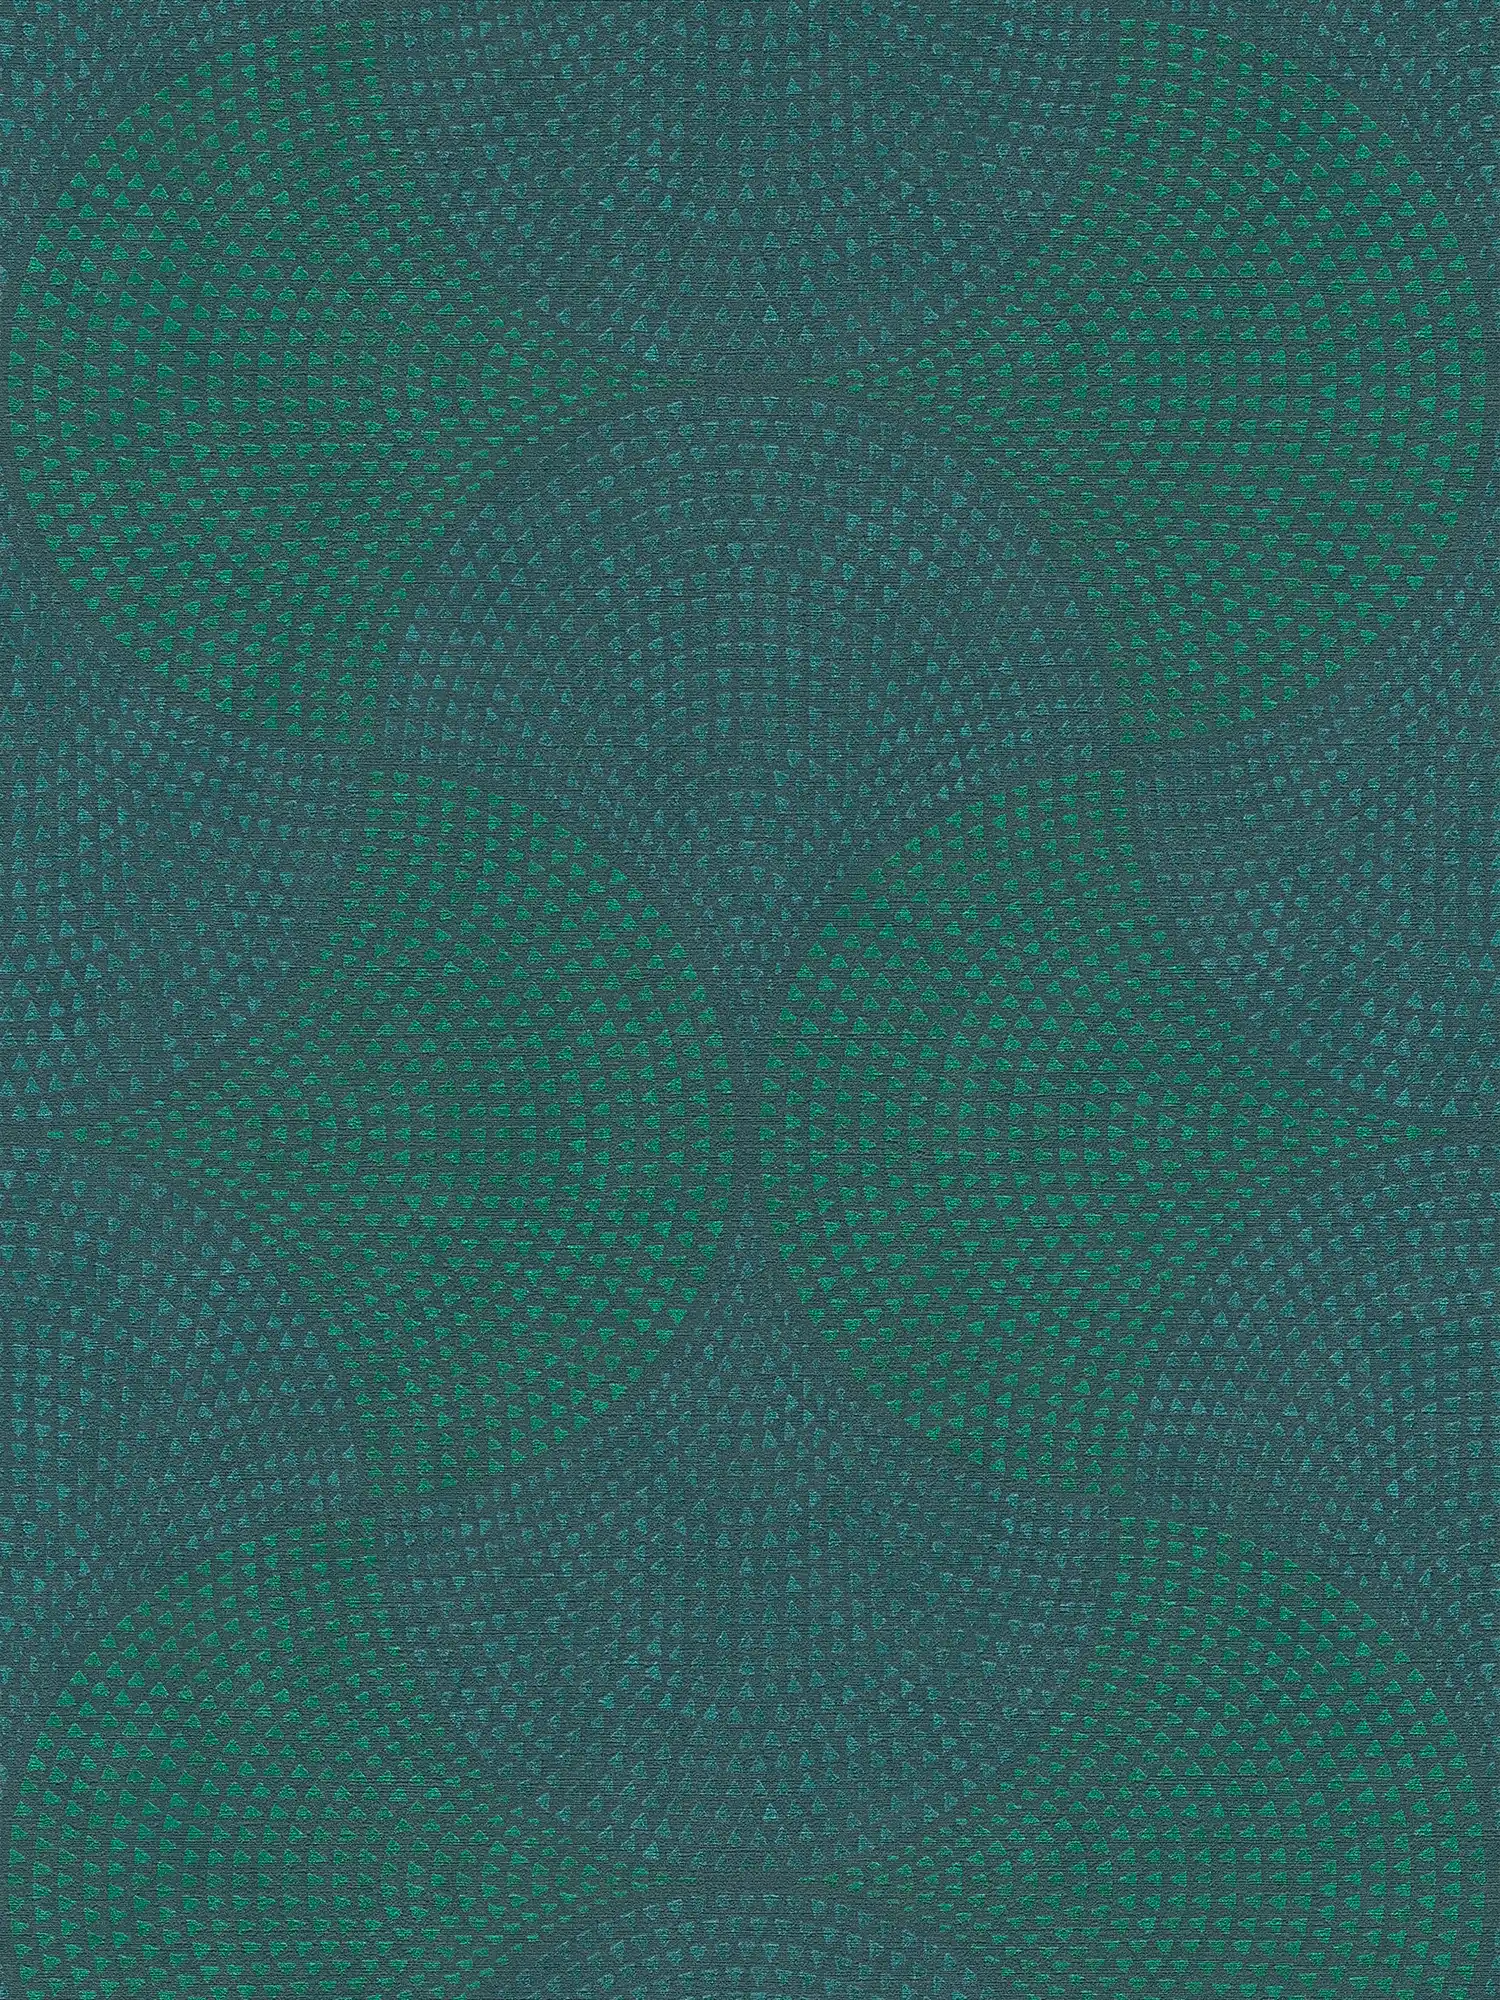 Non-woven wallpaper metallic design with mosaic pattern - blue, green, metallic
